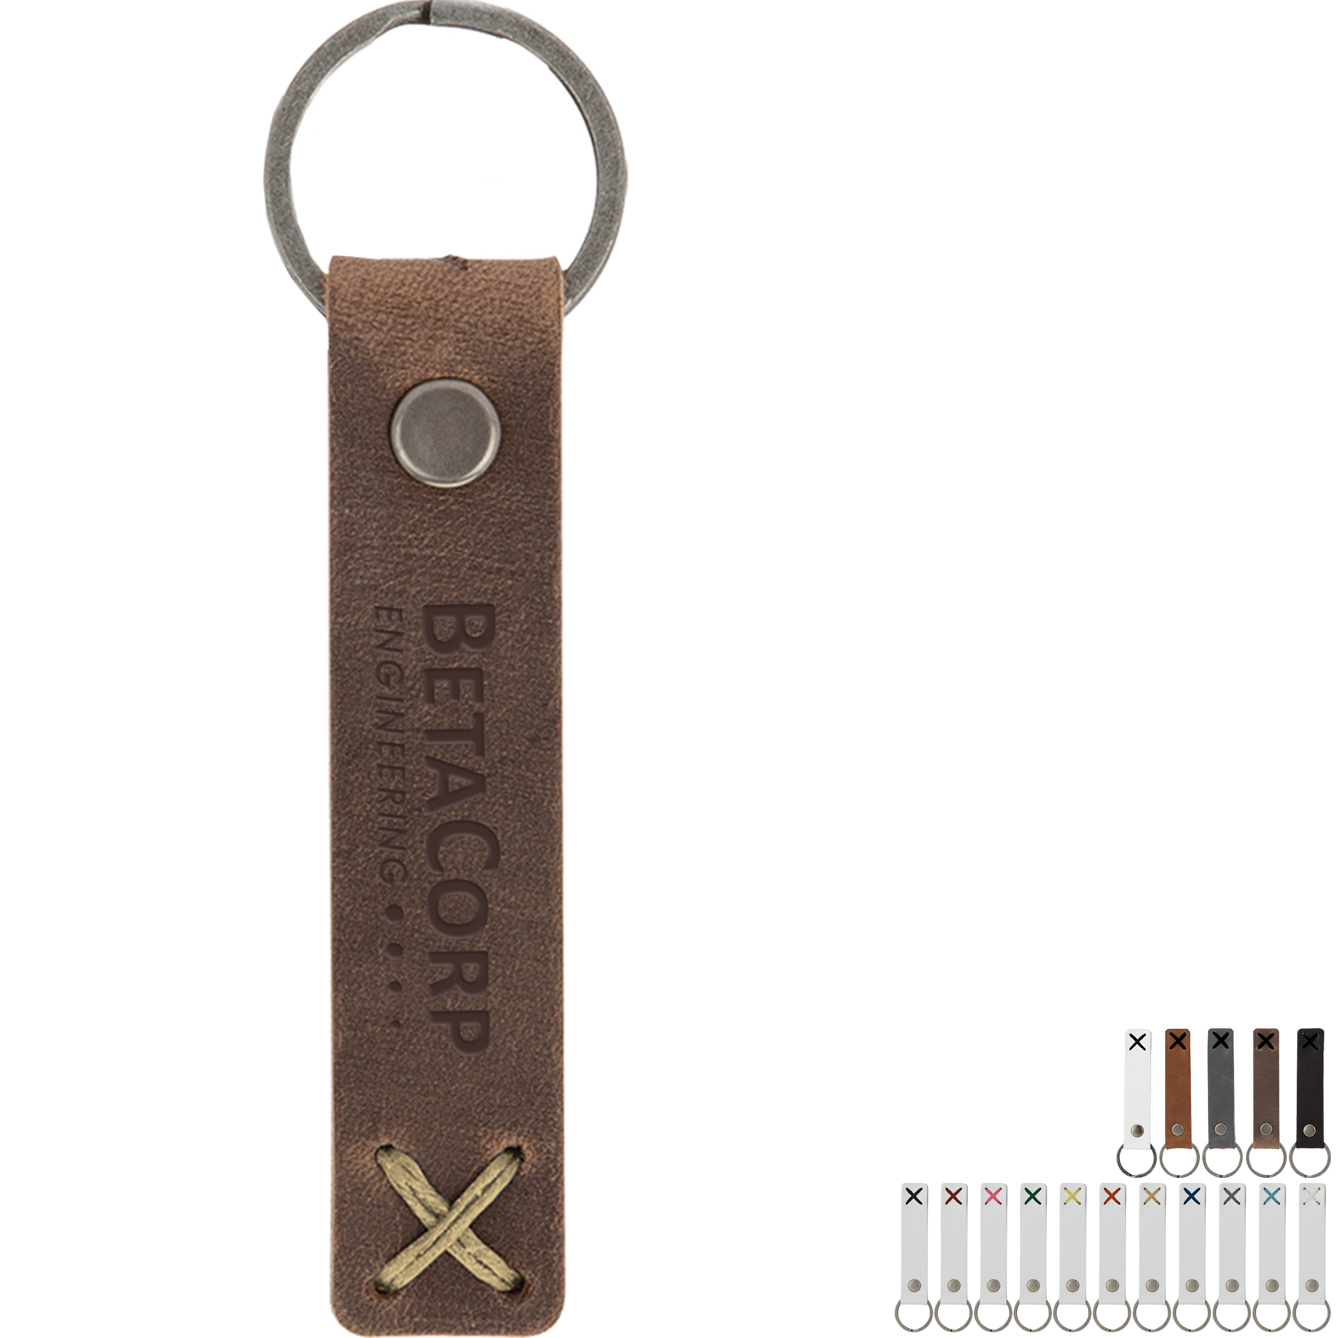 Red leather key chain drop shape ring keychain boyfriend fob holder clip keyring